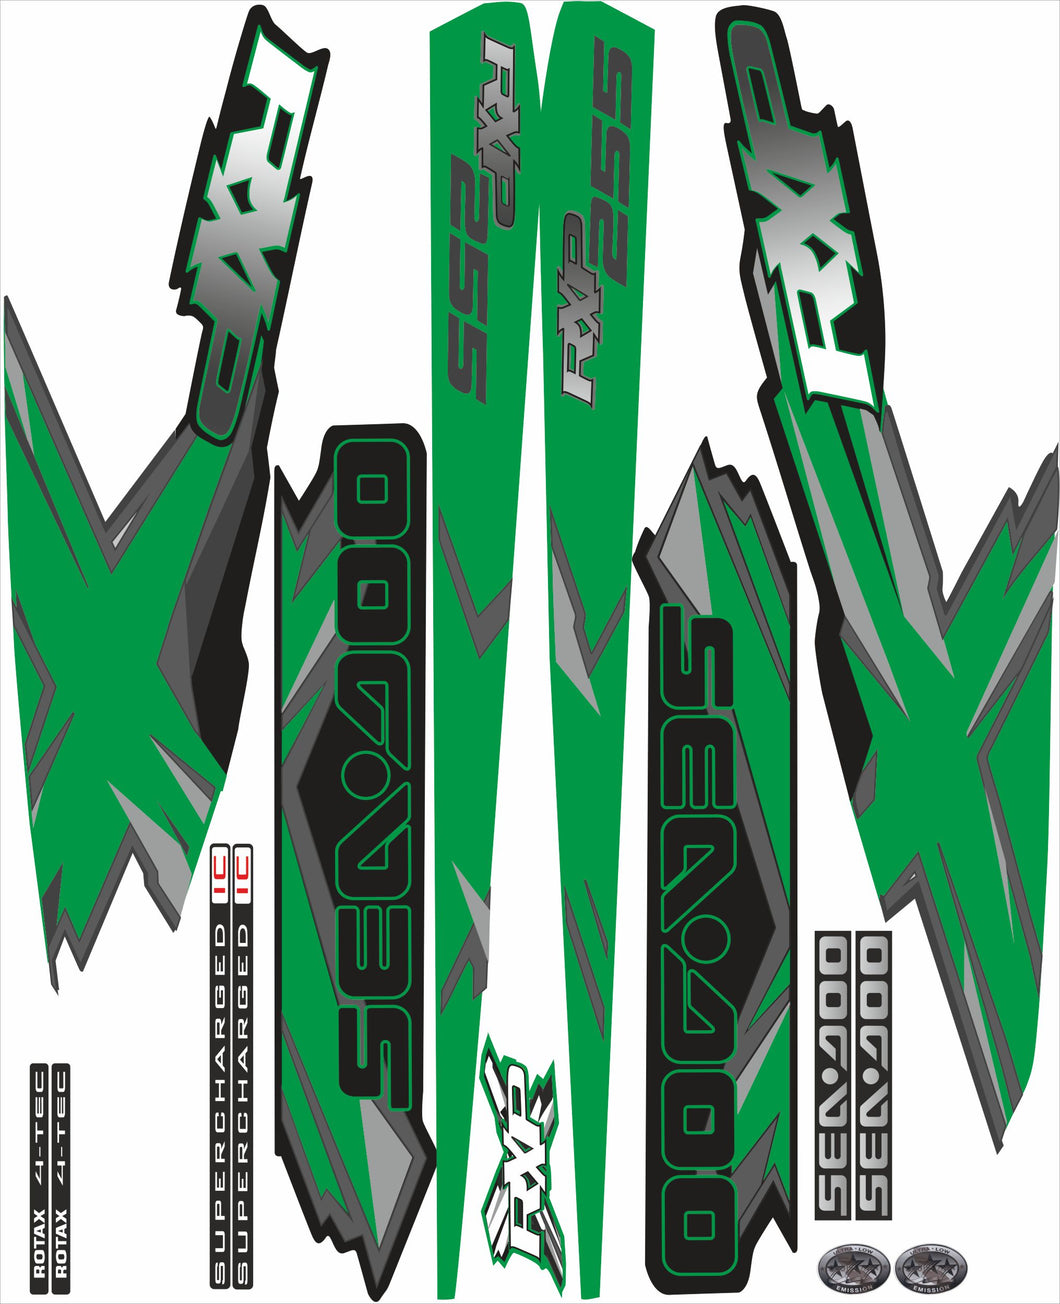 Sea-Doo RXP-X 255 model 2008-2009 Green Edition Jet Ski Full Set Stickers